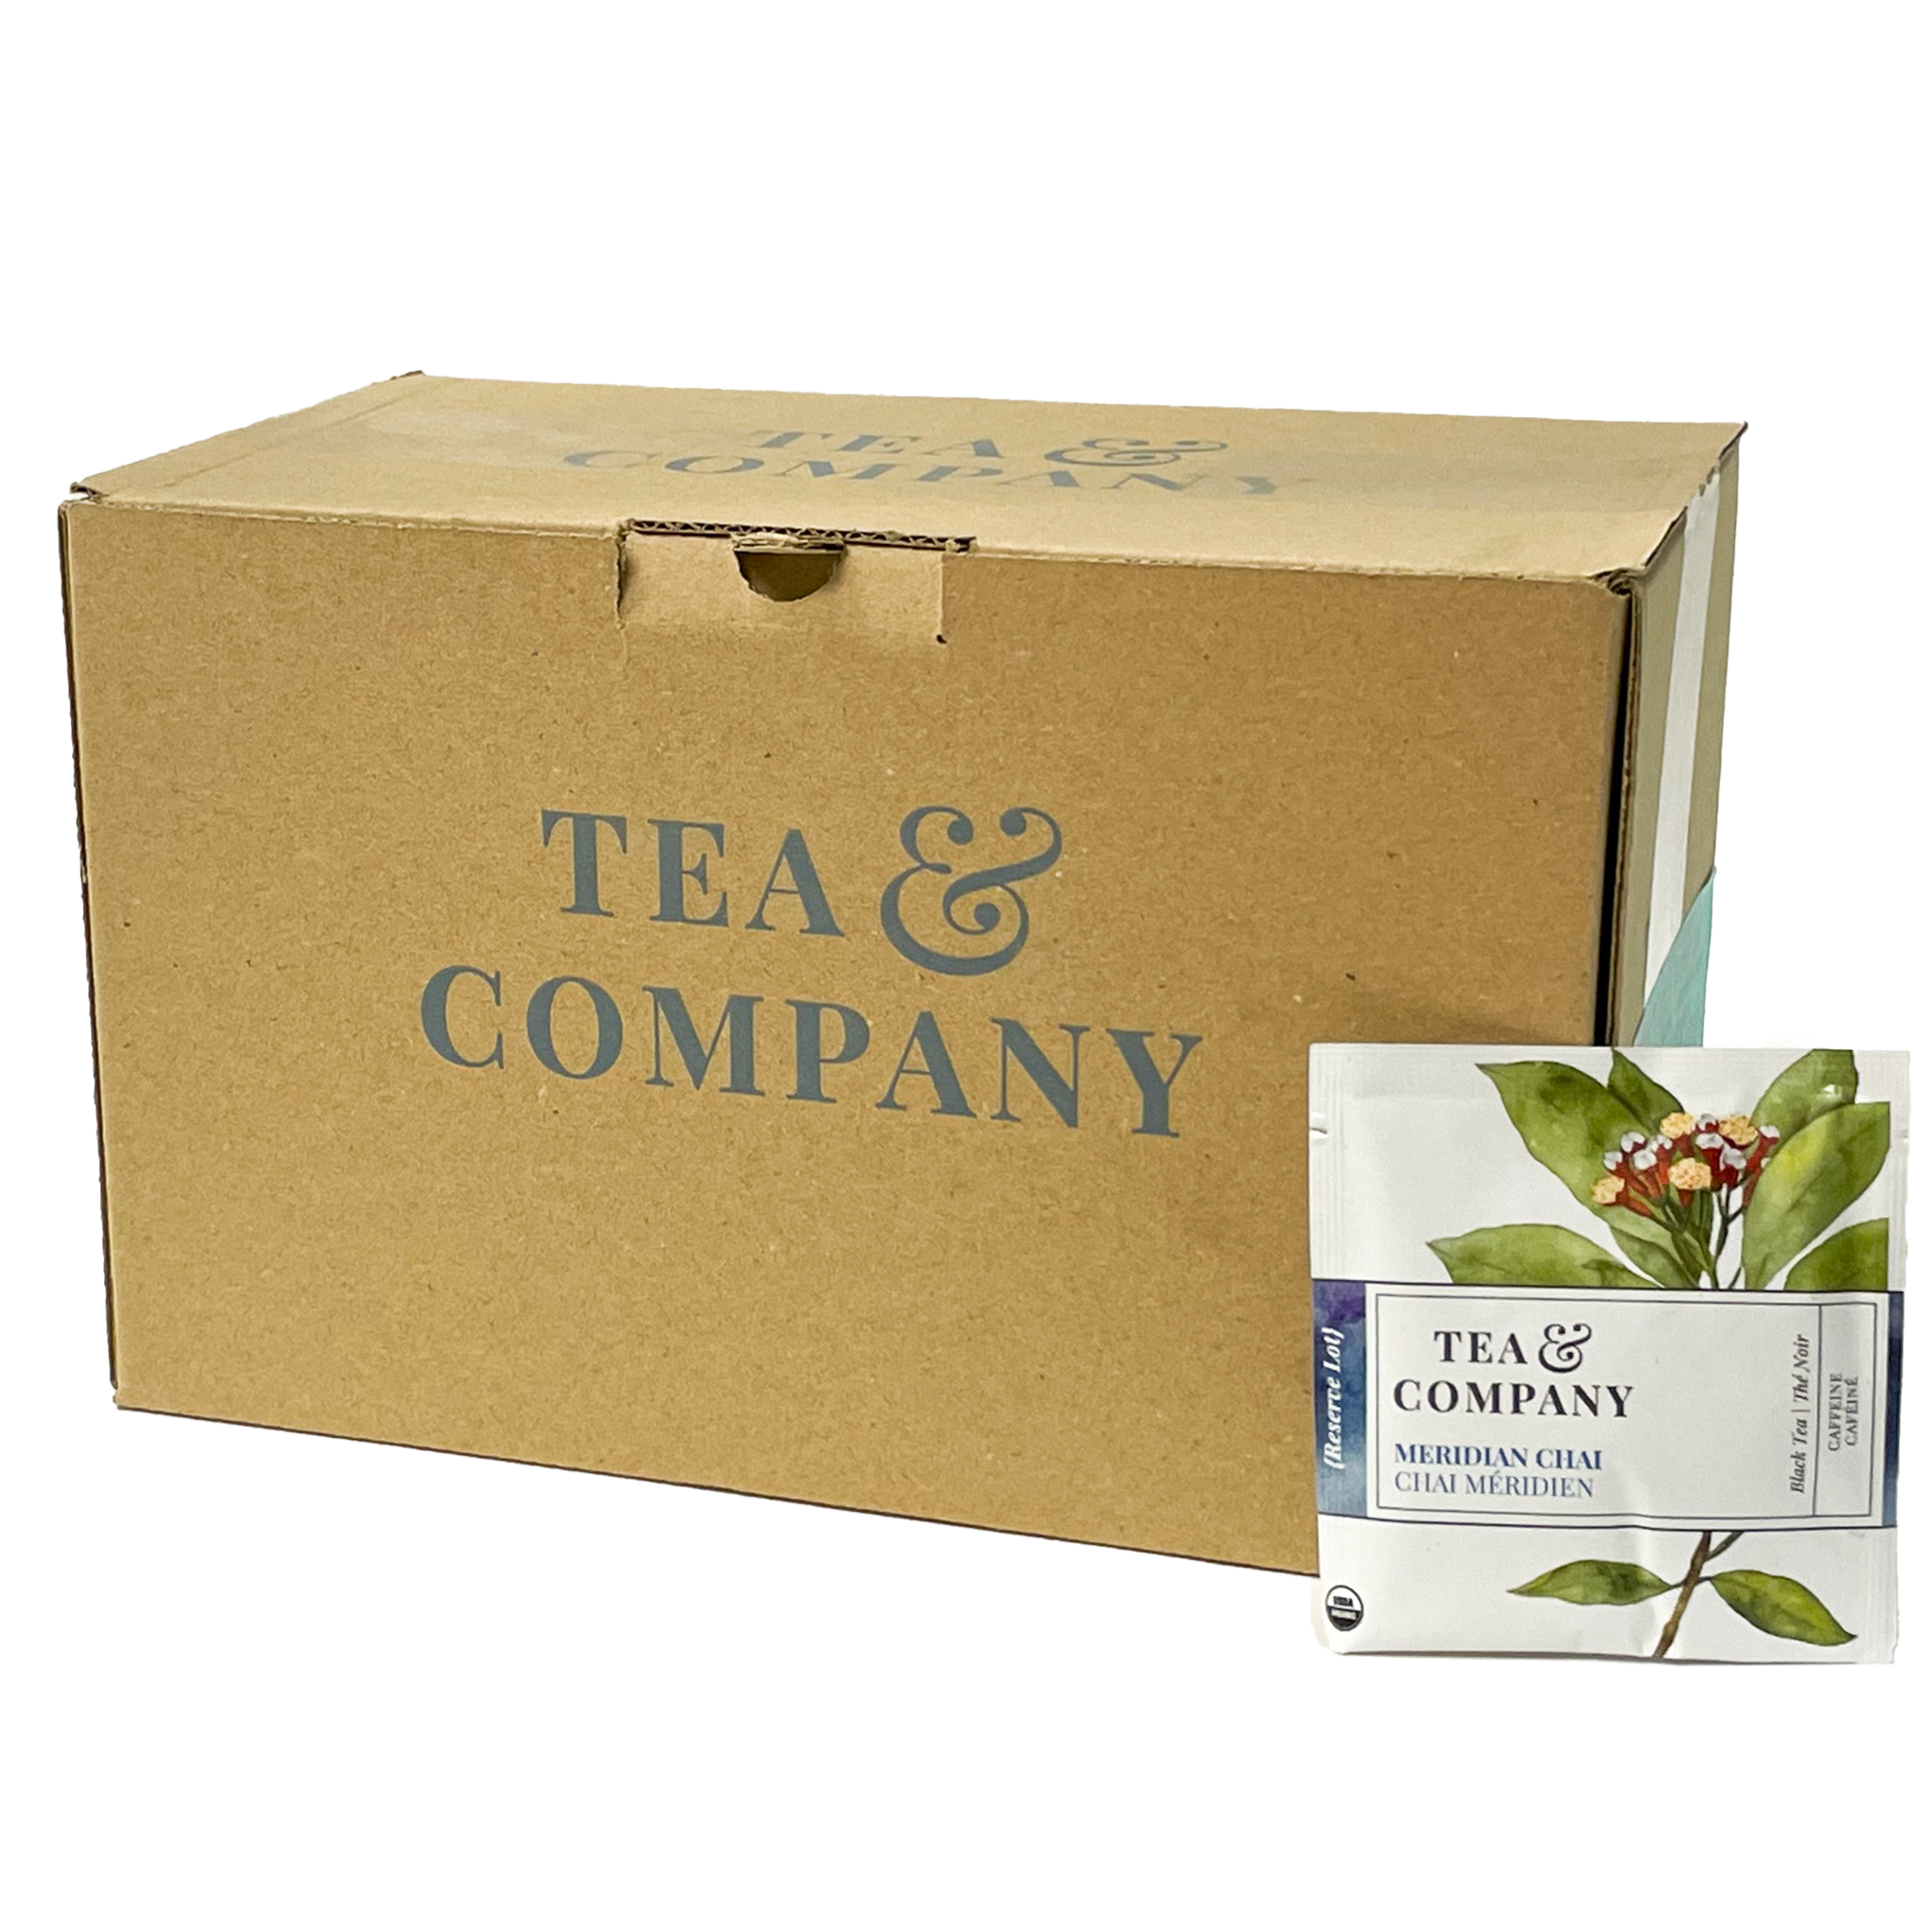 Tea & Company Organic Meridian Chai 100ct._tabor espresso